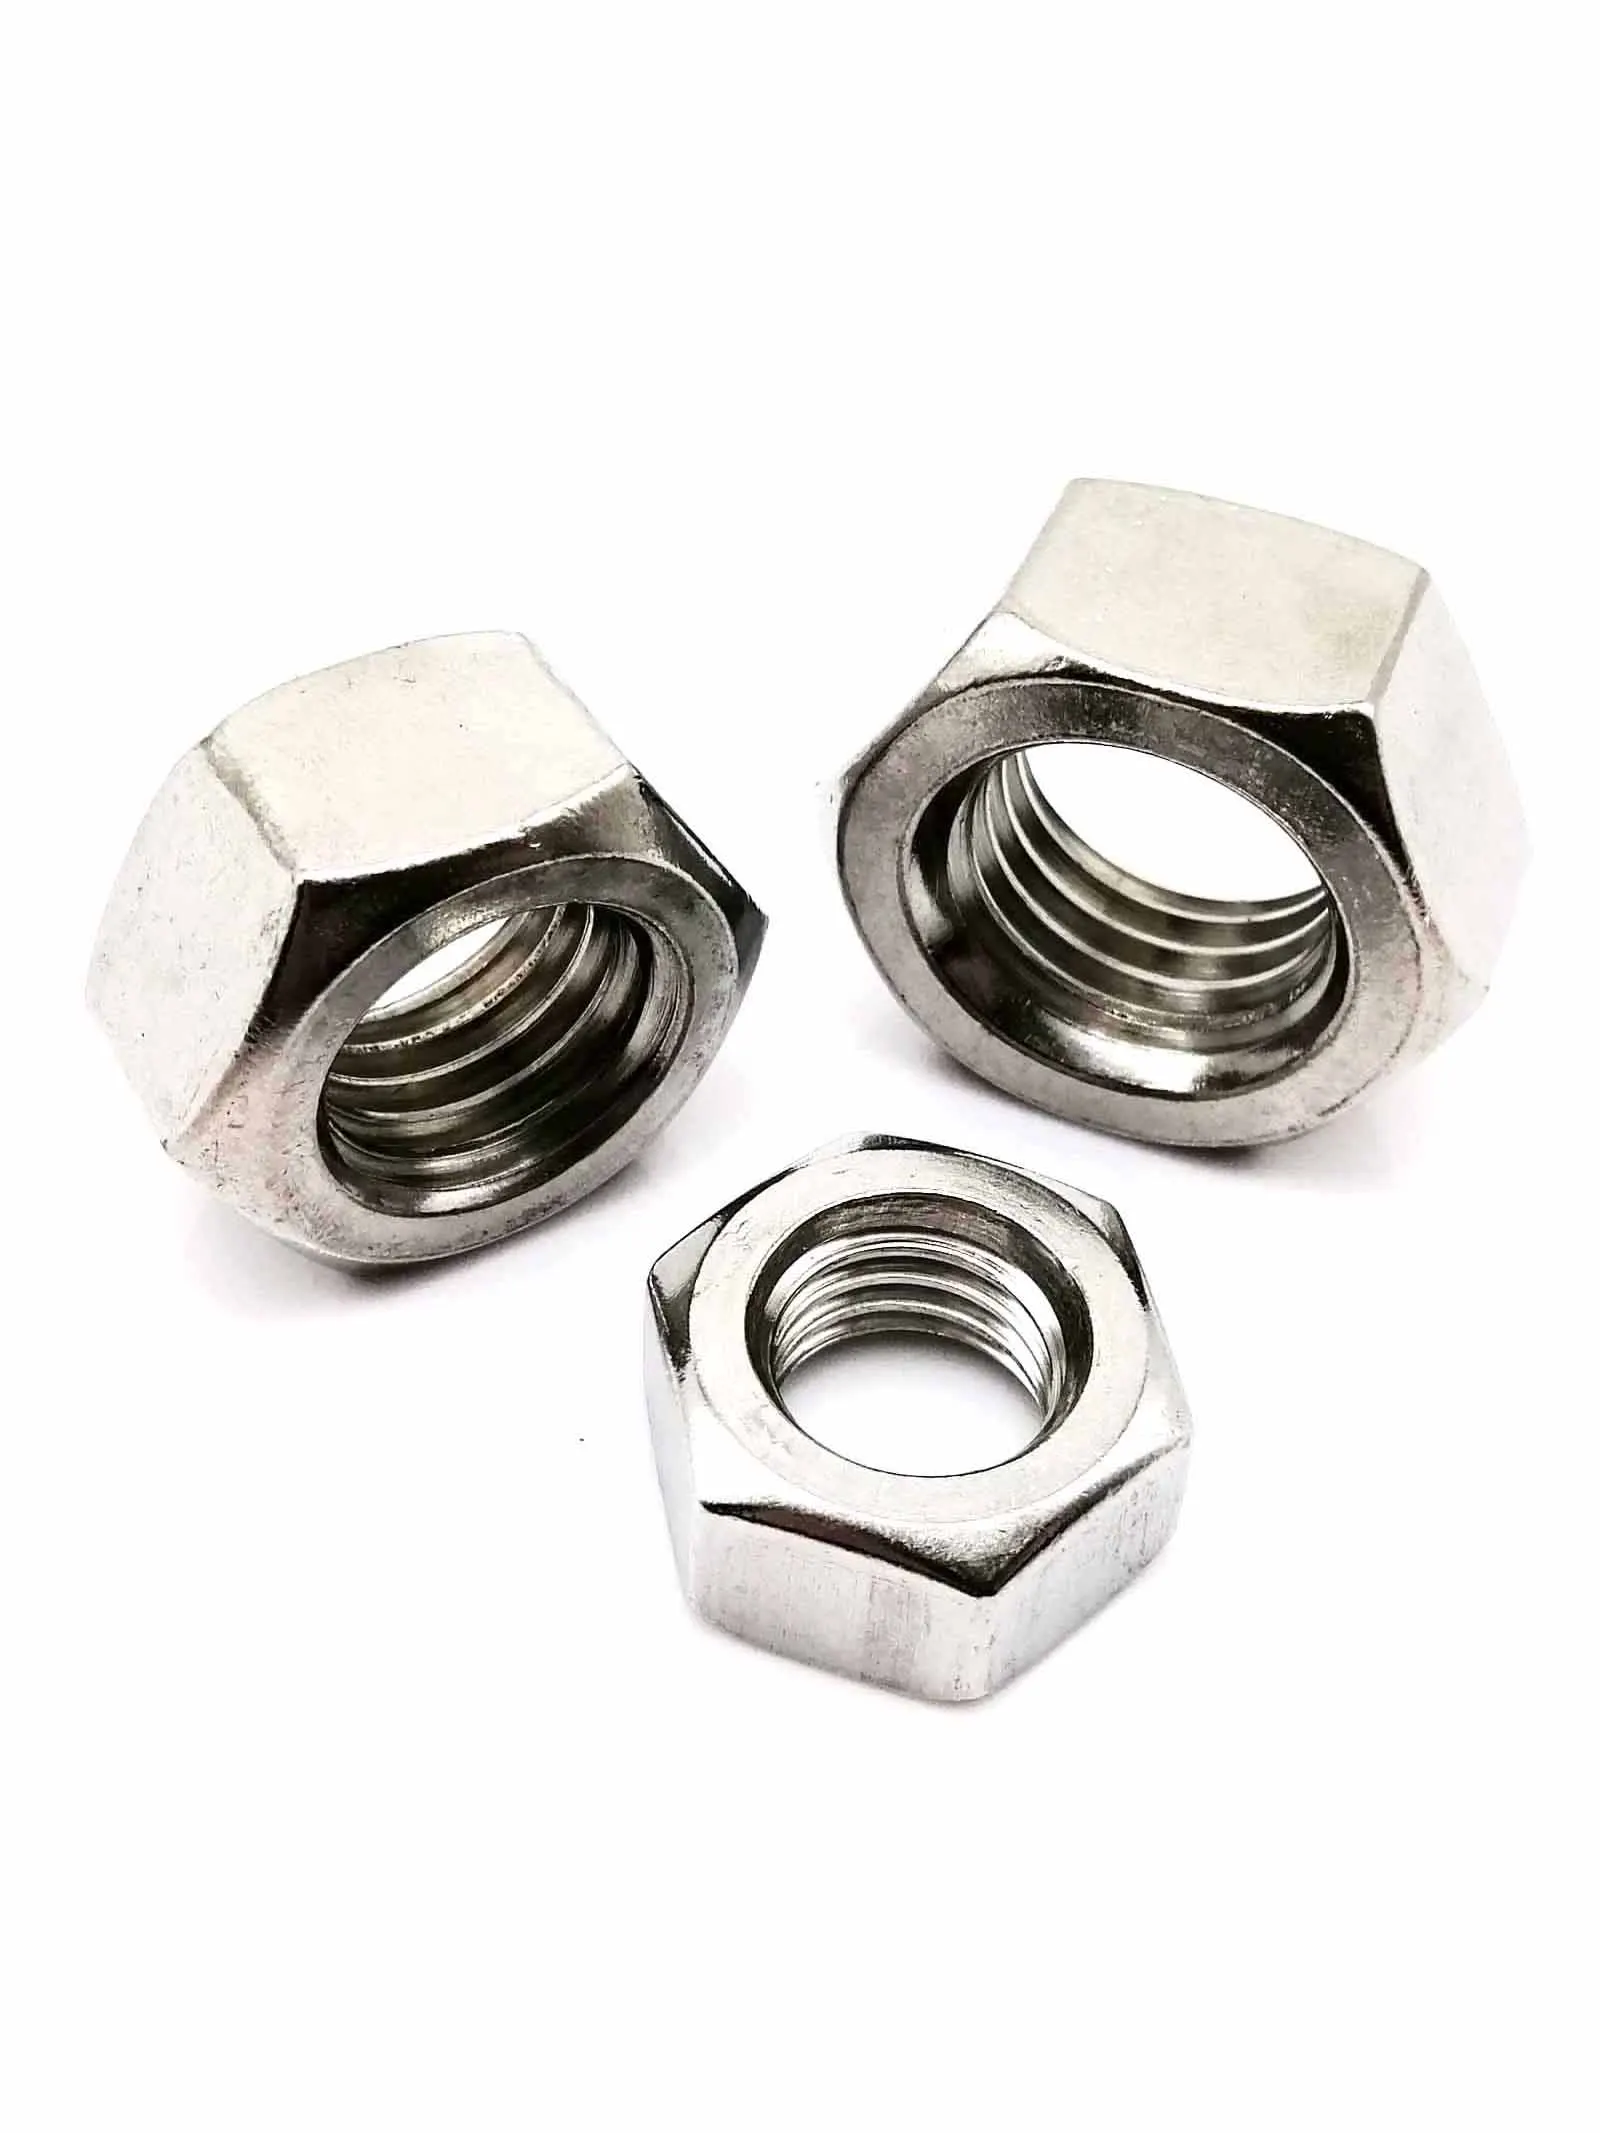 10 Nylon Insert Lock Nut Set 5/16 Inch Diameter Hole 304 SS Stainless Steel 18 